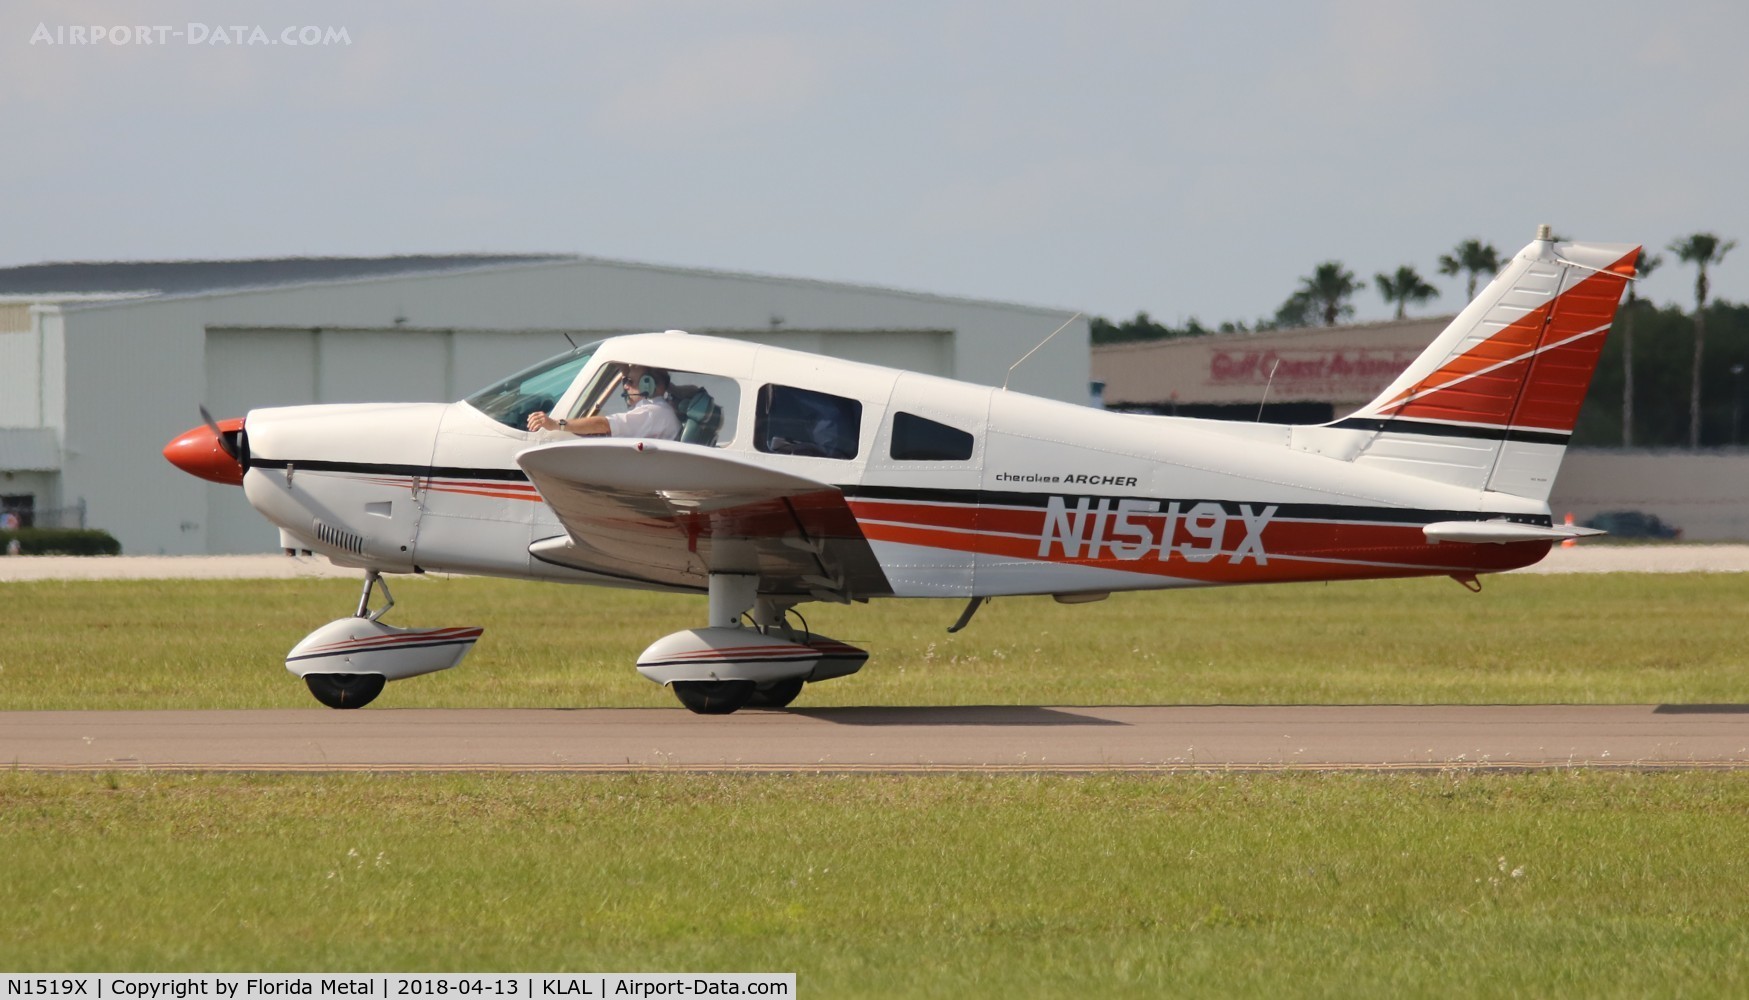 N1519X, 1975 Piper PA-28-180 C/N 28-7505238, SNF LAL 2018